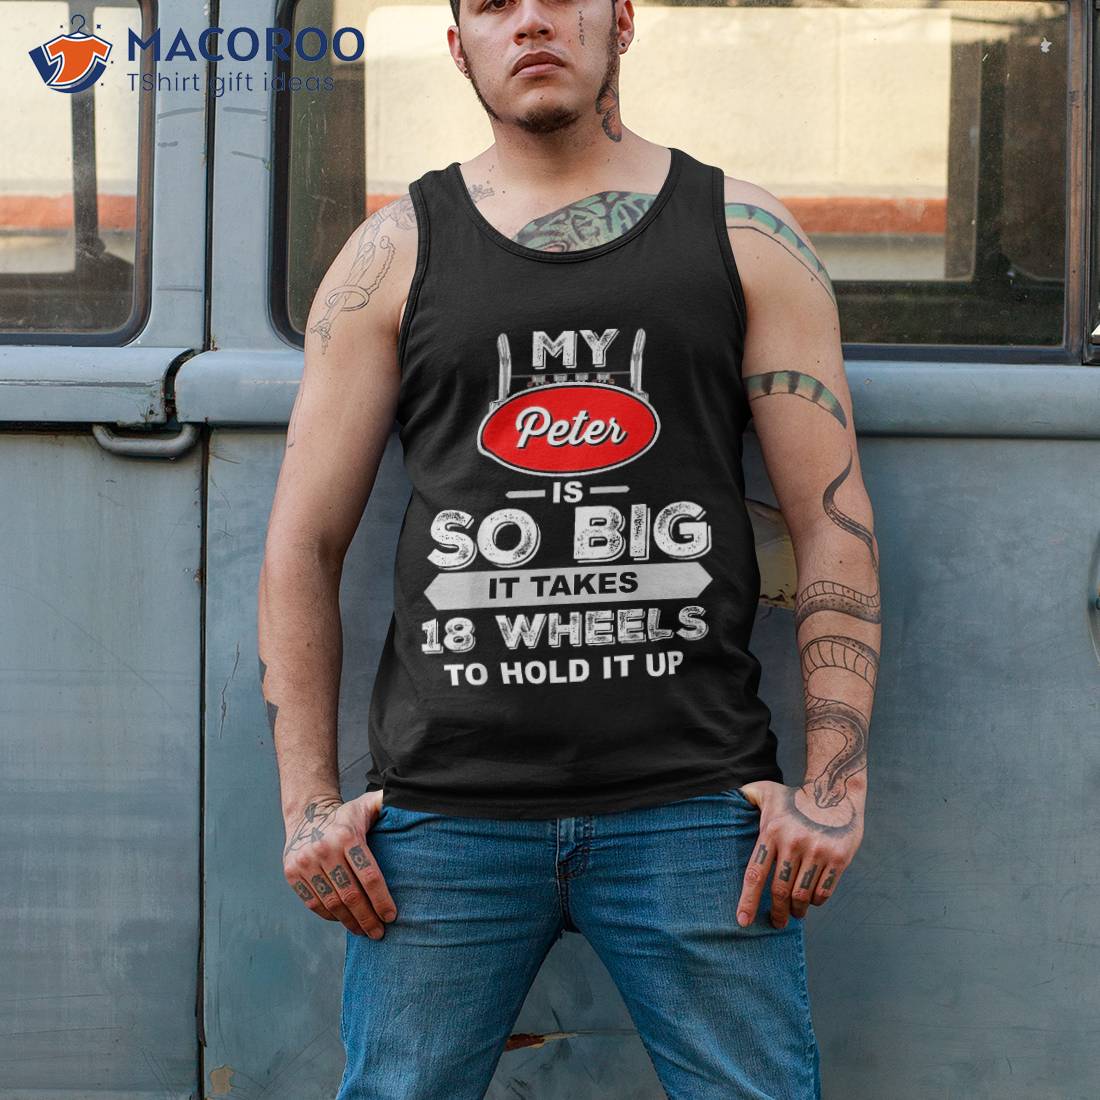 https://images.macoroo.com/wp-content/uploads/2023/06/funny-truck-driver-my-peter-is-so-big-trucker-gift-shirt-tank-top-2.jpg